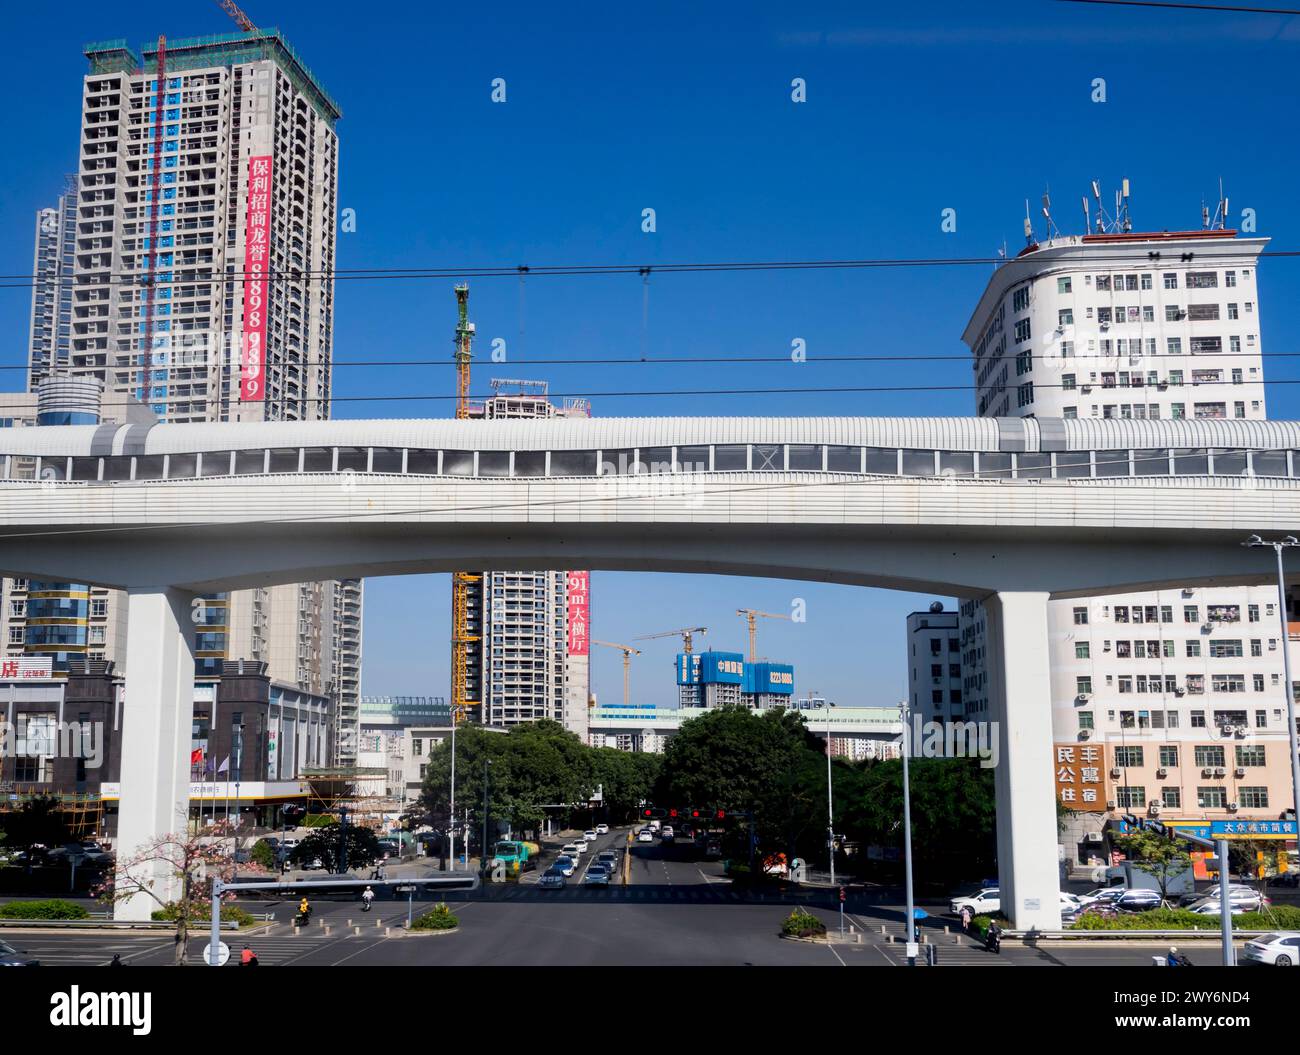 China, Guandong, Shenzhen high speed train track Stock Photo